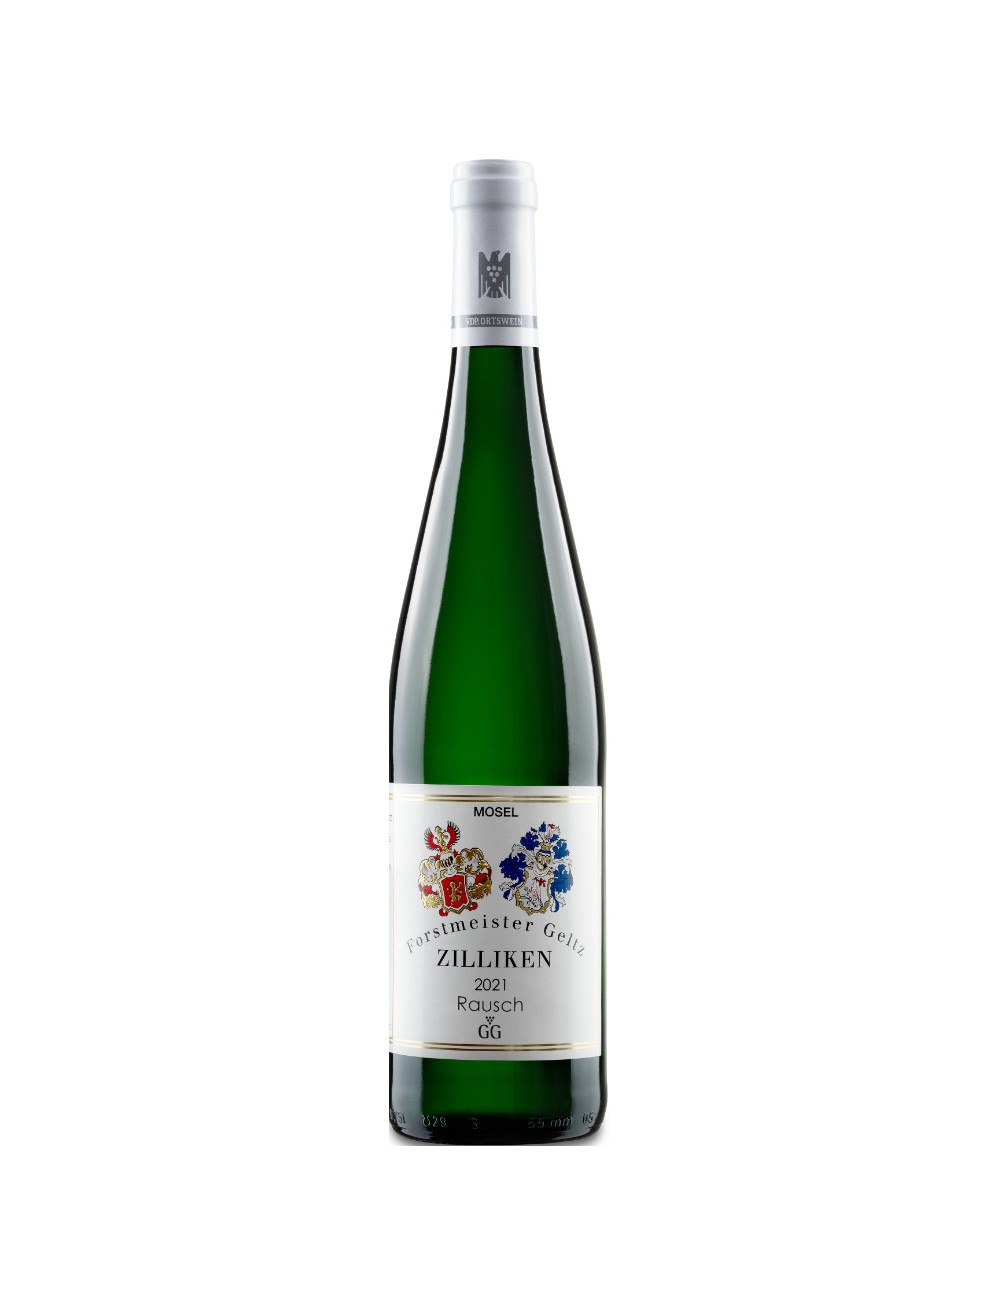 (Grand Grosses Geltz-Zilliken 2022 from Free Winery Gewächs Forstmeister Rausch online. in dry Riesling Cru) Saarburg shipping,